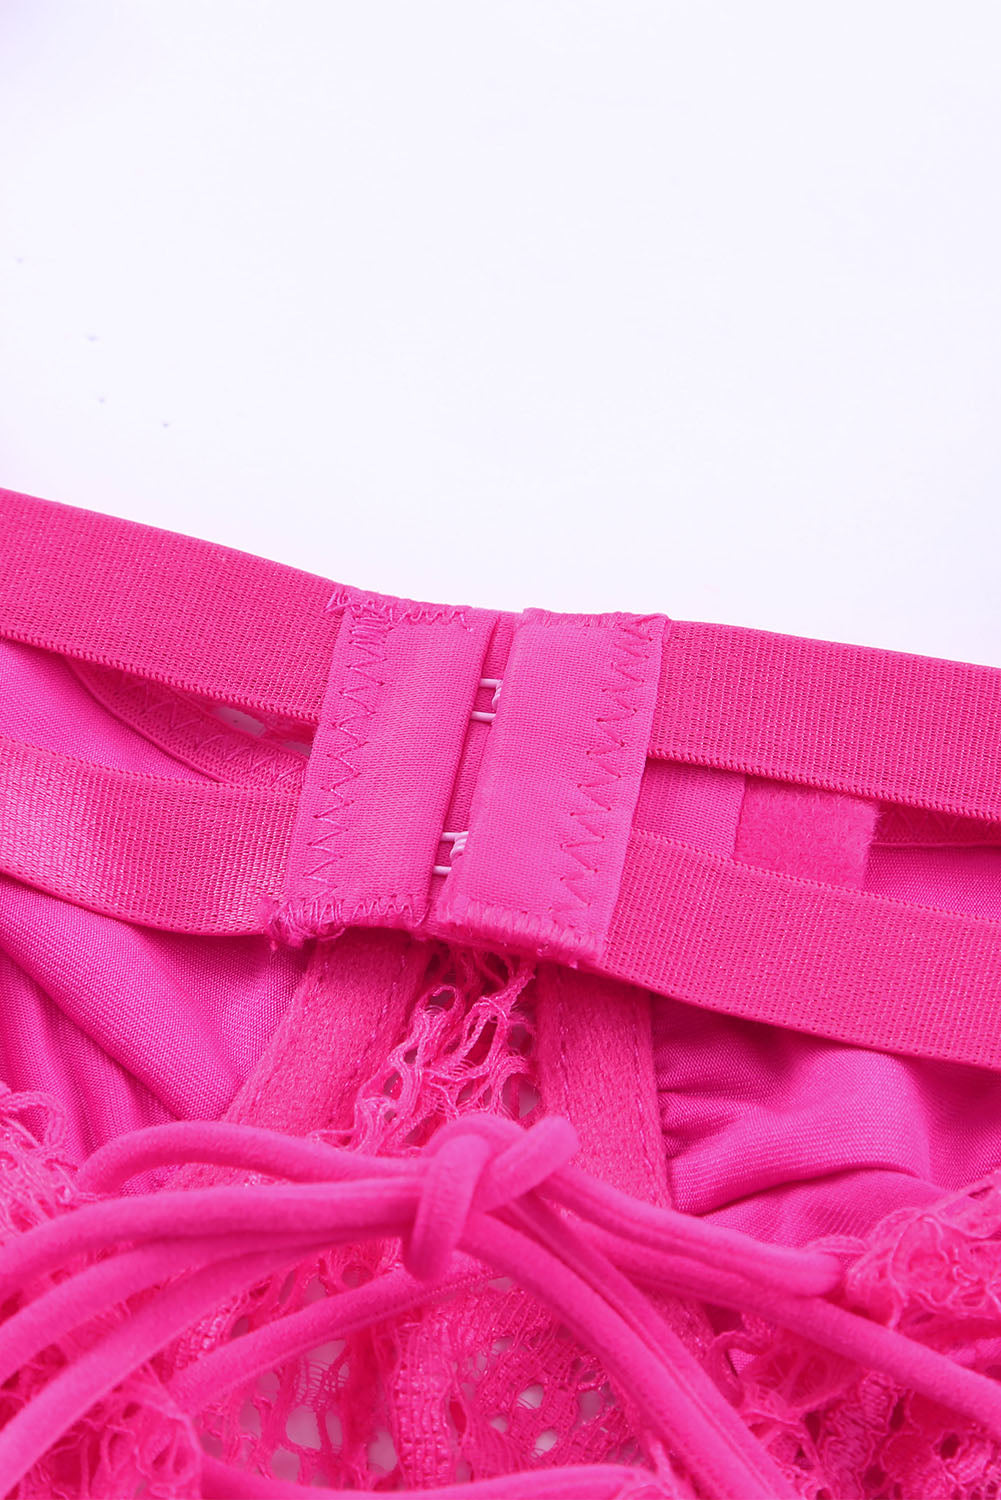 Rose Adjustable Straps Floral Lace Crochet Teddy Lingerie Teddy Lingerie JT's Designer Fashion